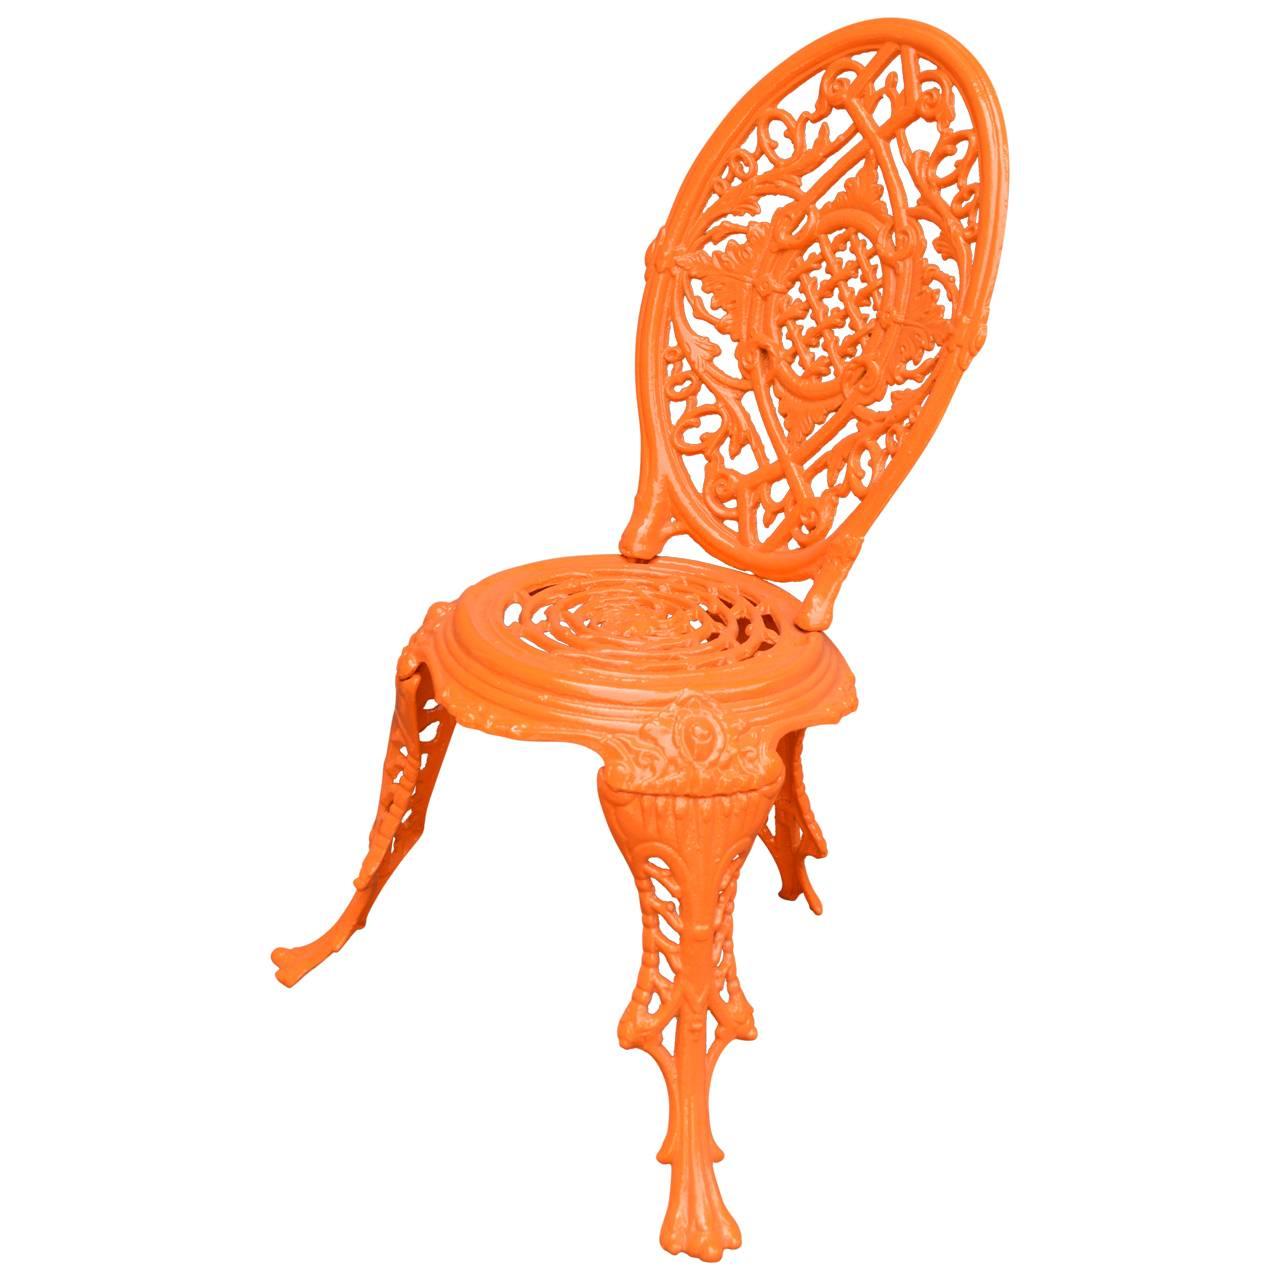 Early 20th Century Orange Cast Iron Garden Chair